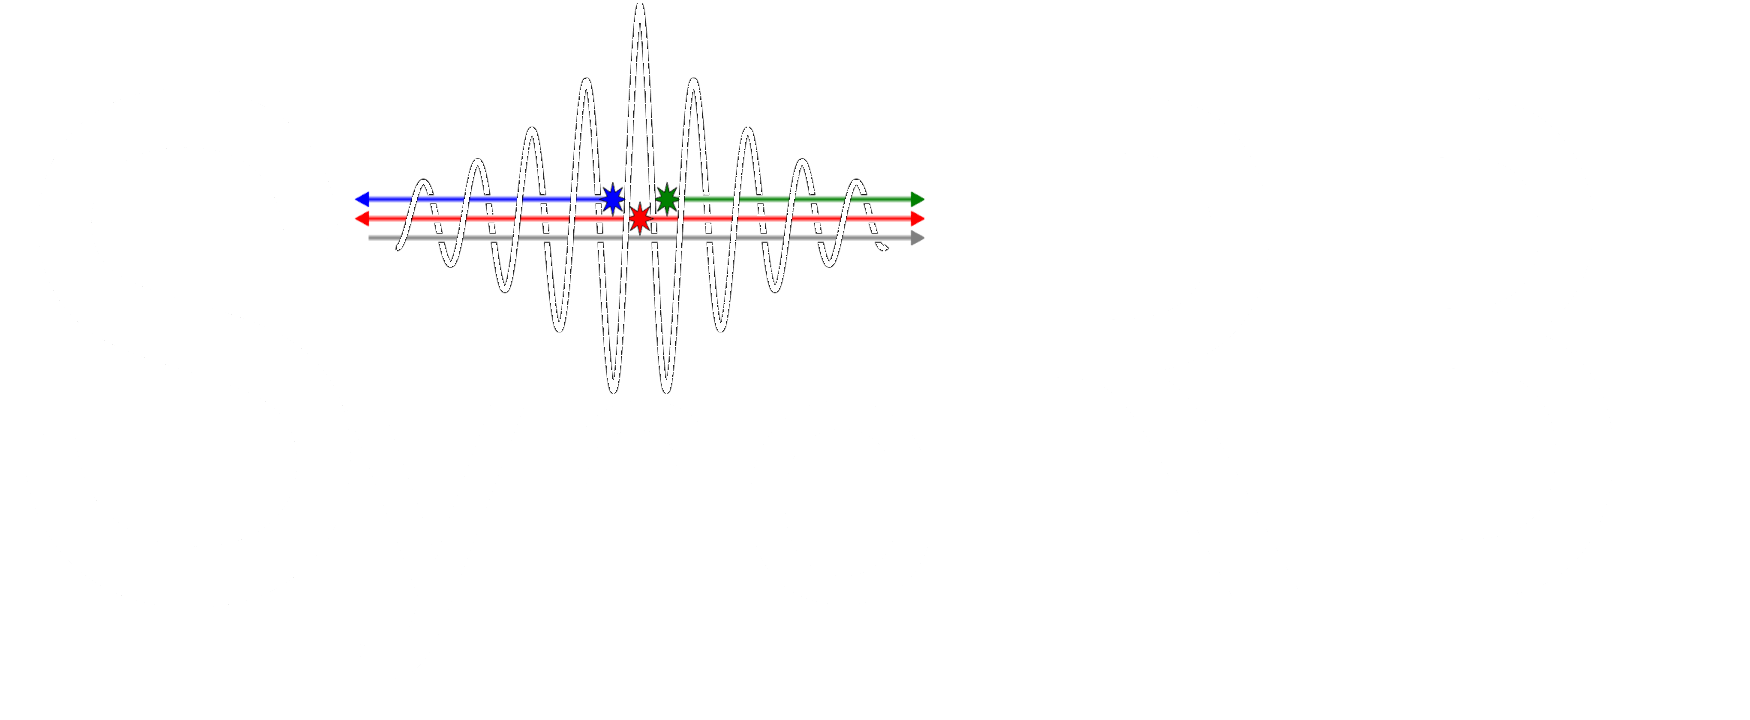 logo for CCP SyneRBI